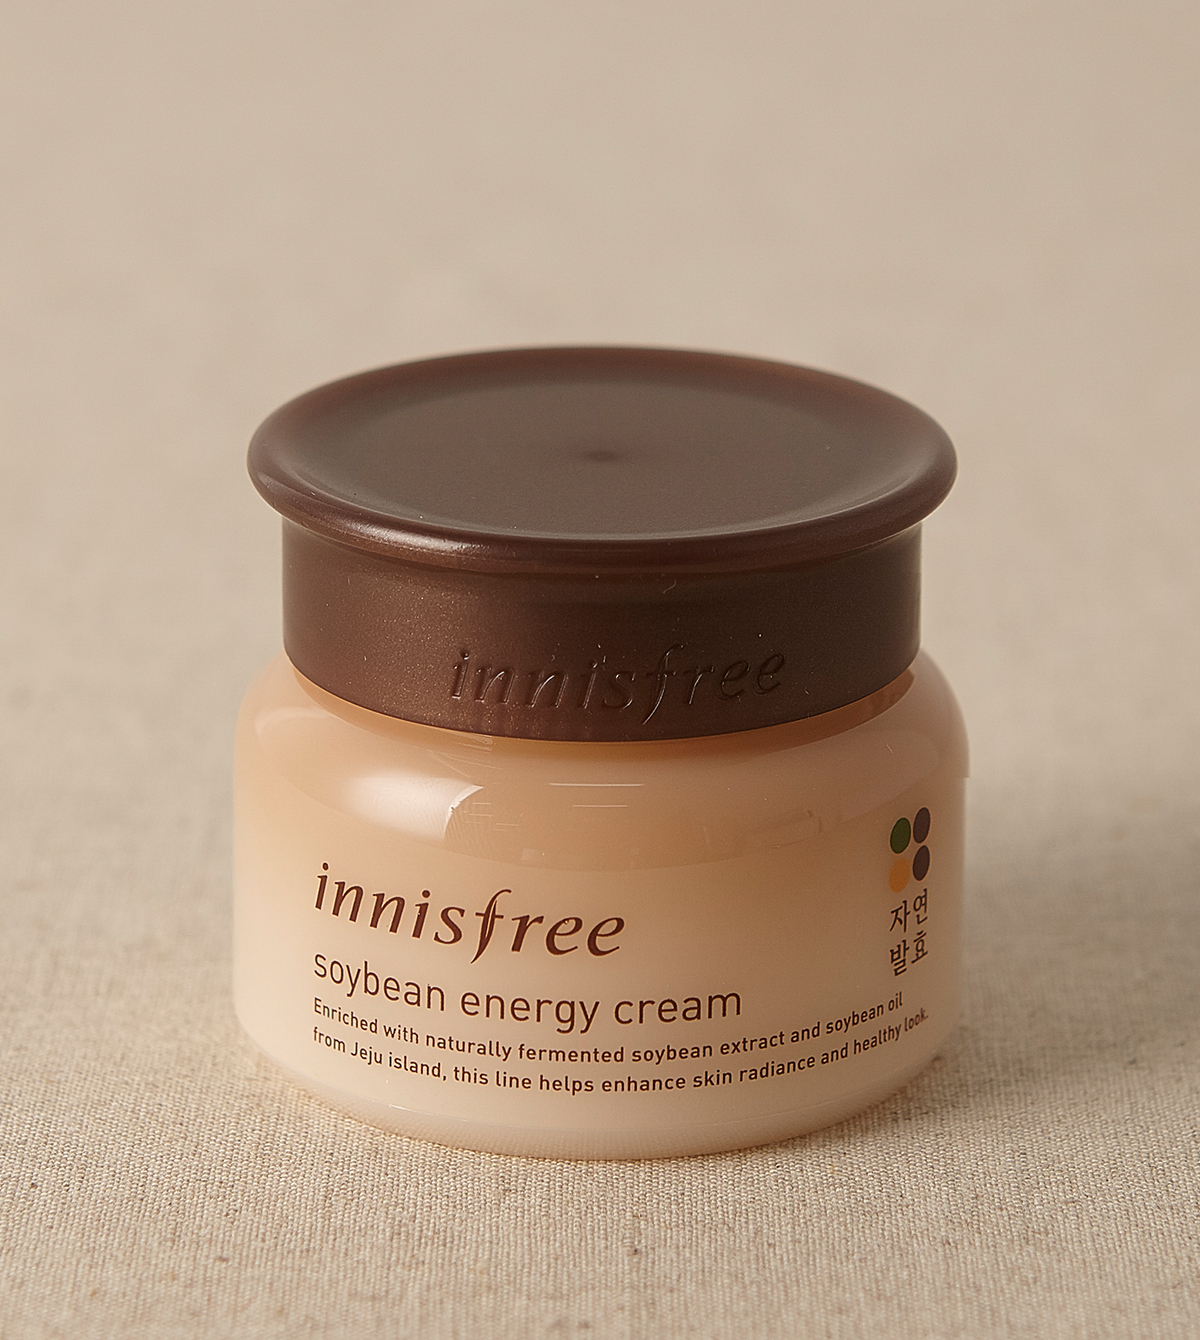 Innisfree Soybean Energy Cream - Innisfree Skin Care - Top 10 Moisturizers from Innisfree India to Try this Season